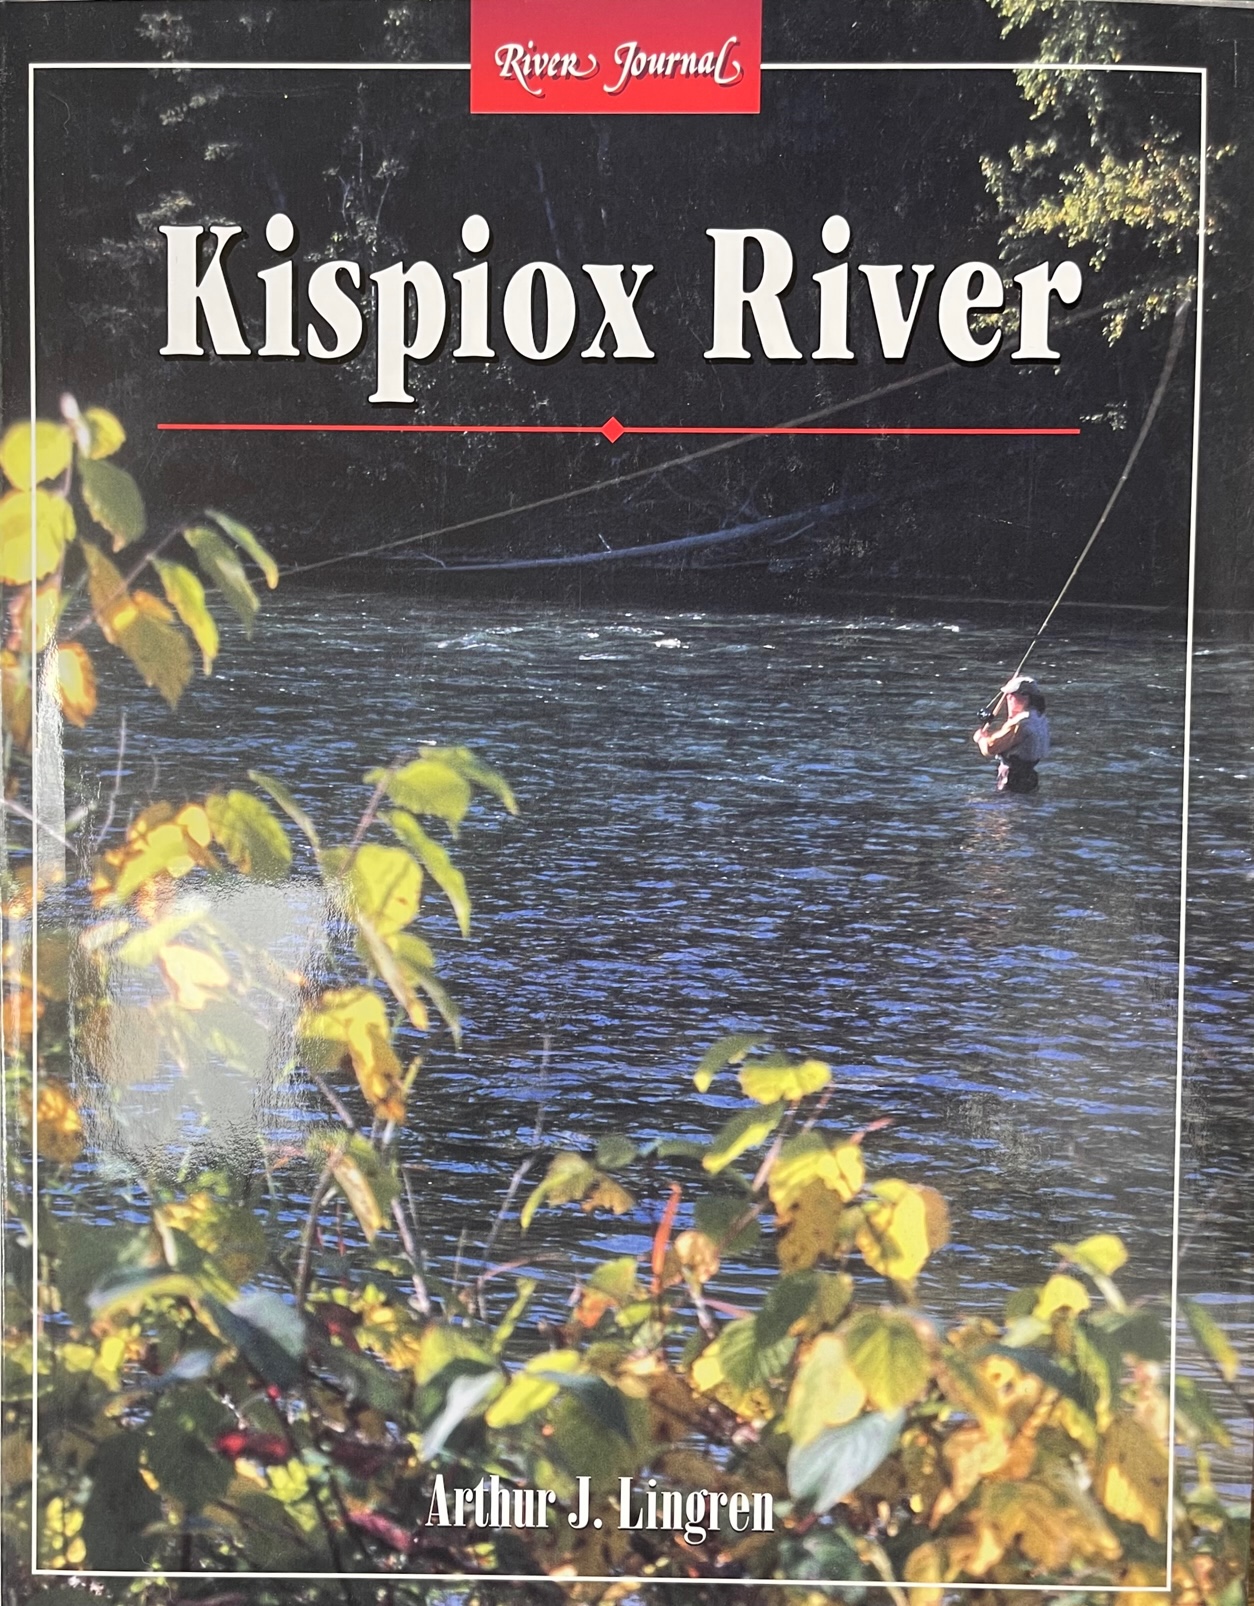 River Journal: Kispiox River - by Art Lingren